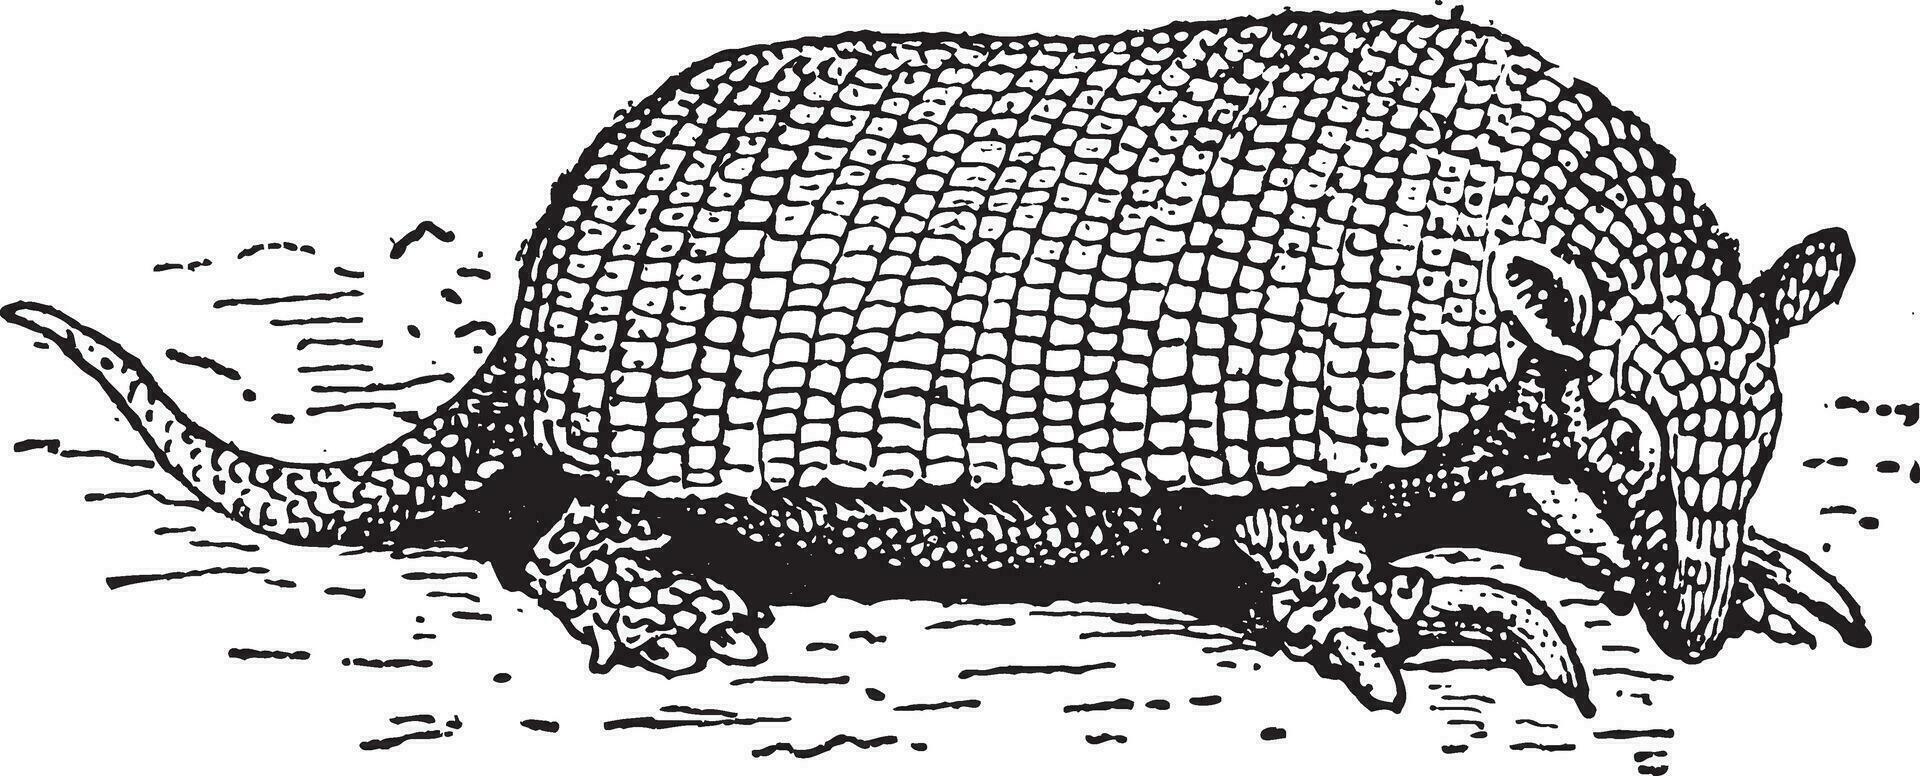 Giant armadillo or Priodontes maximus vintage engraving vector